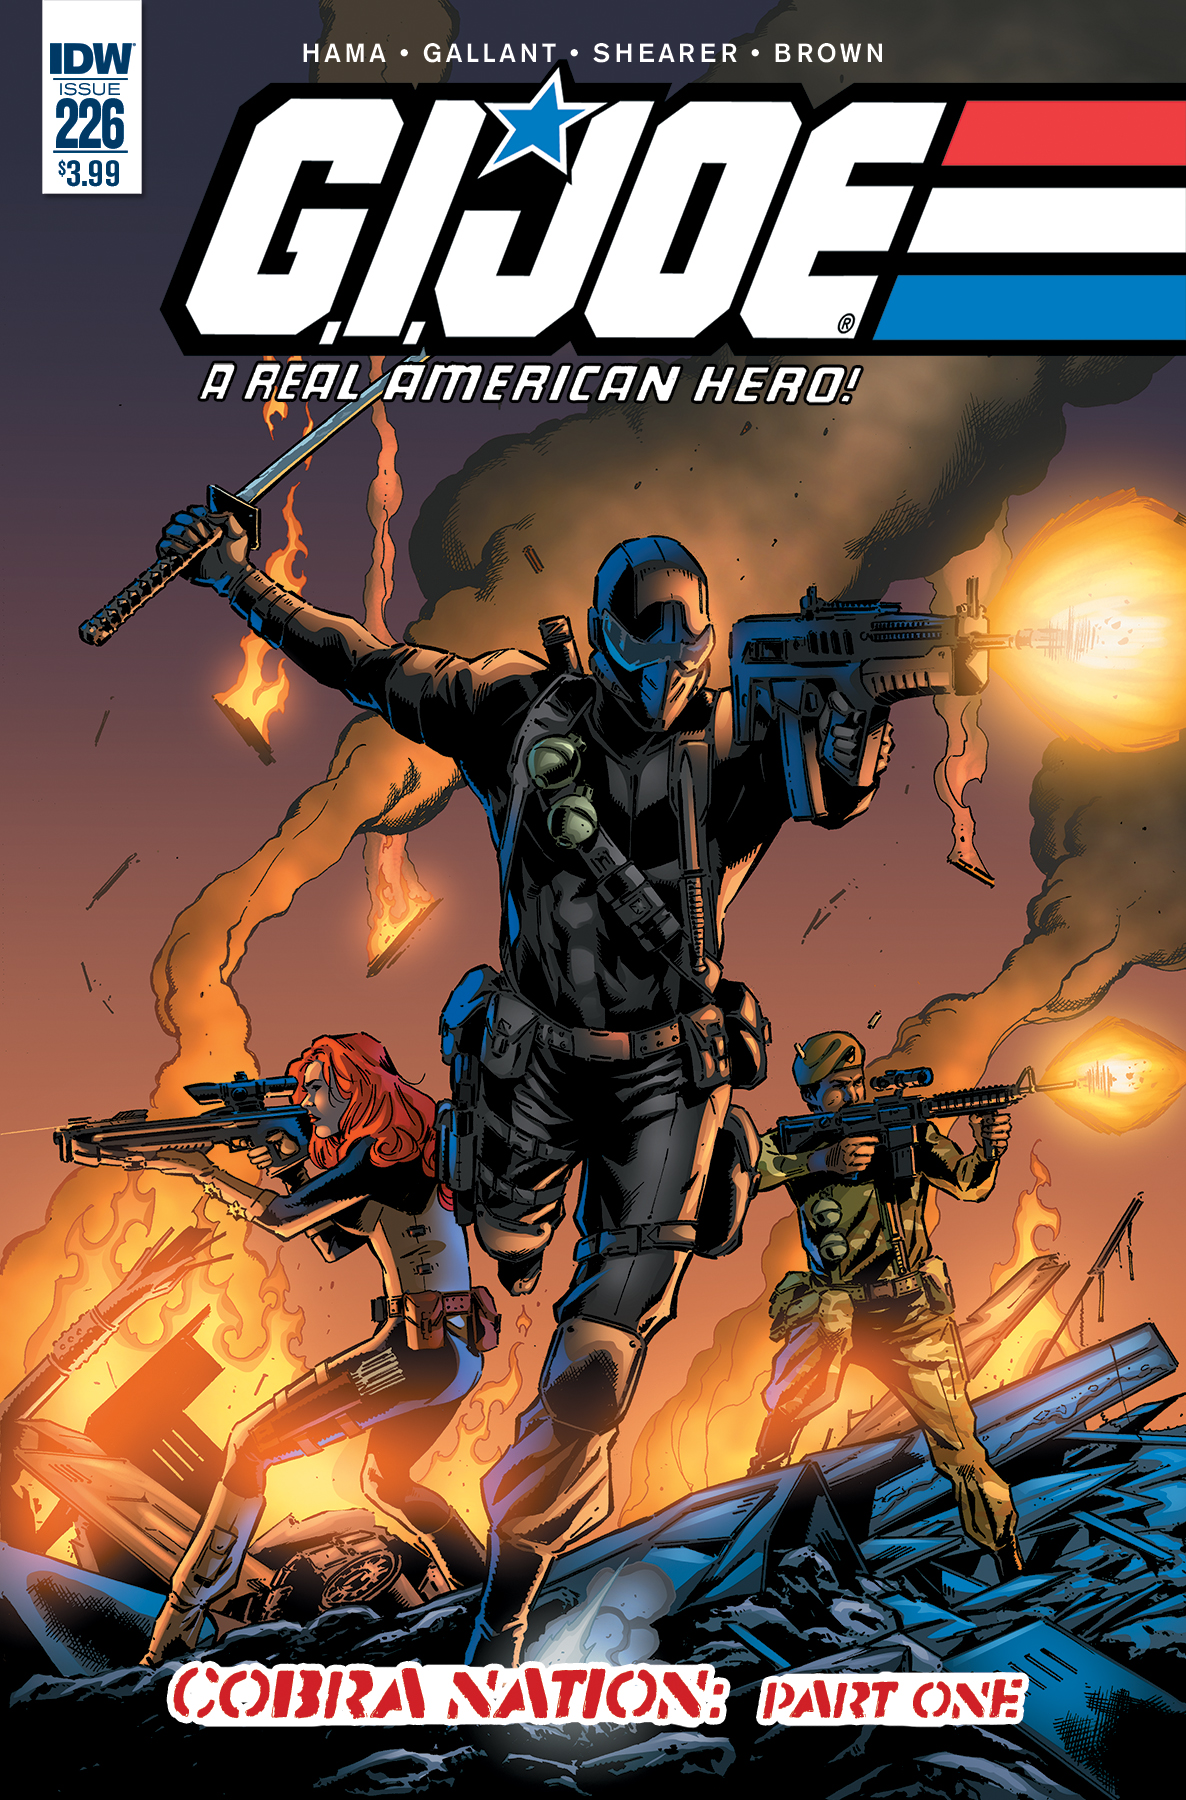 G.I. JOE: A Real American Hero #226: Cobra Nation, Part 1